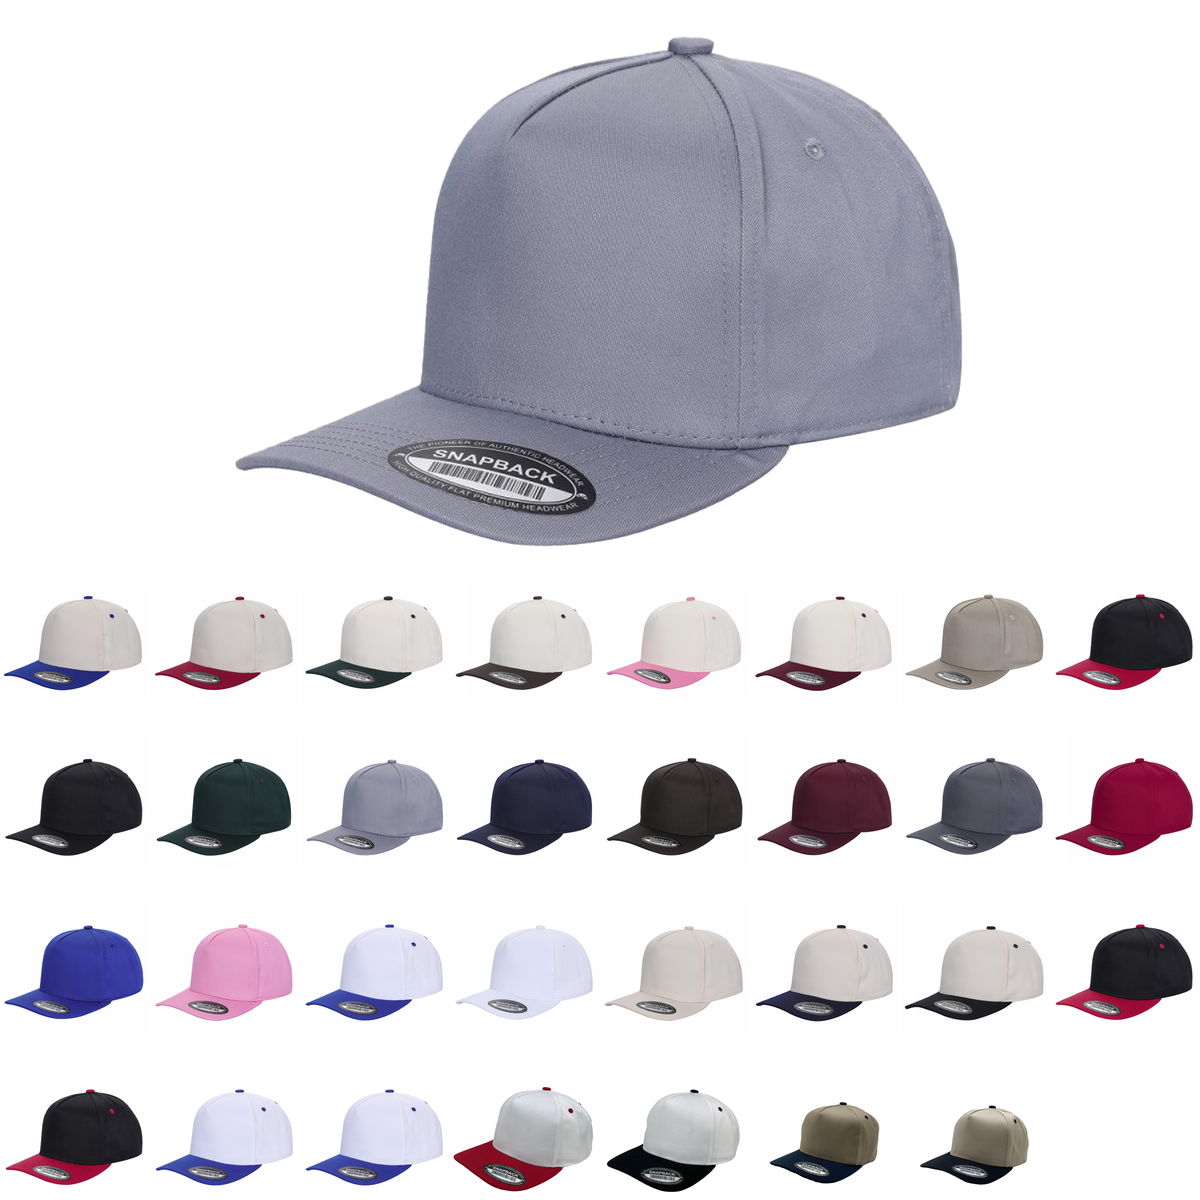 The Wholesale 5 Cap Baseball Park Panel Unbranded Blank Hat, –